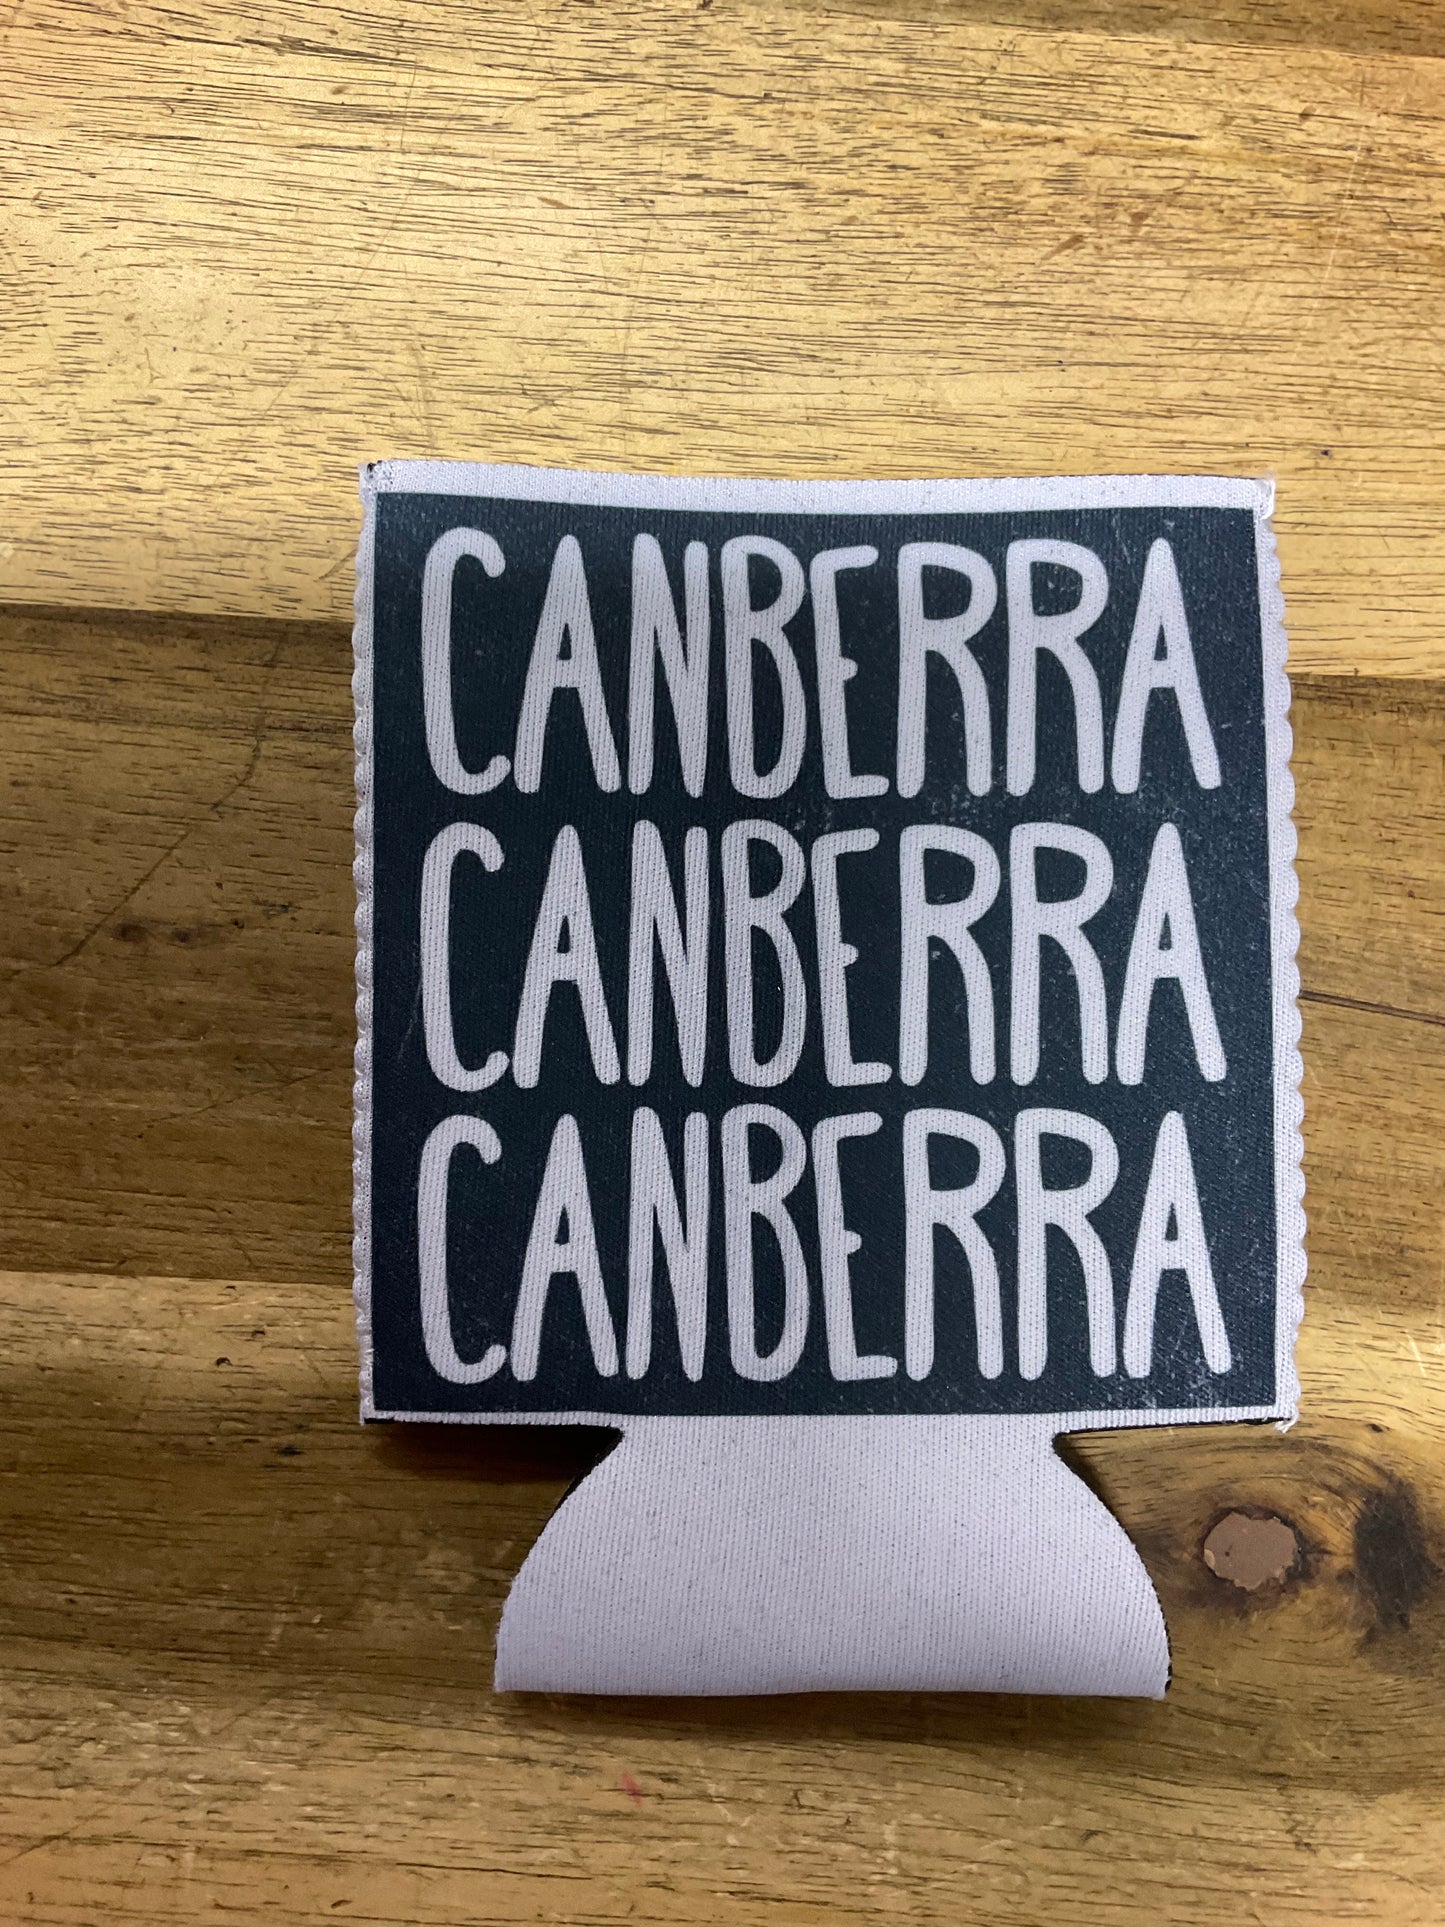 Stubby Holder - Canberra Canberra Canberra